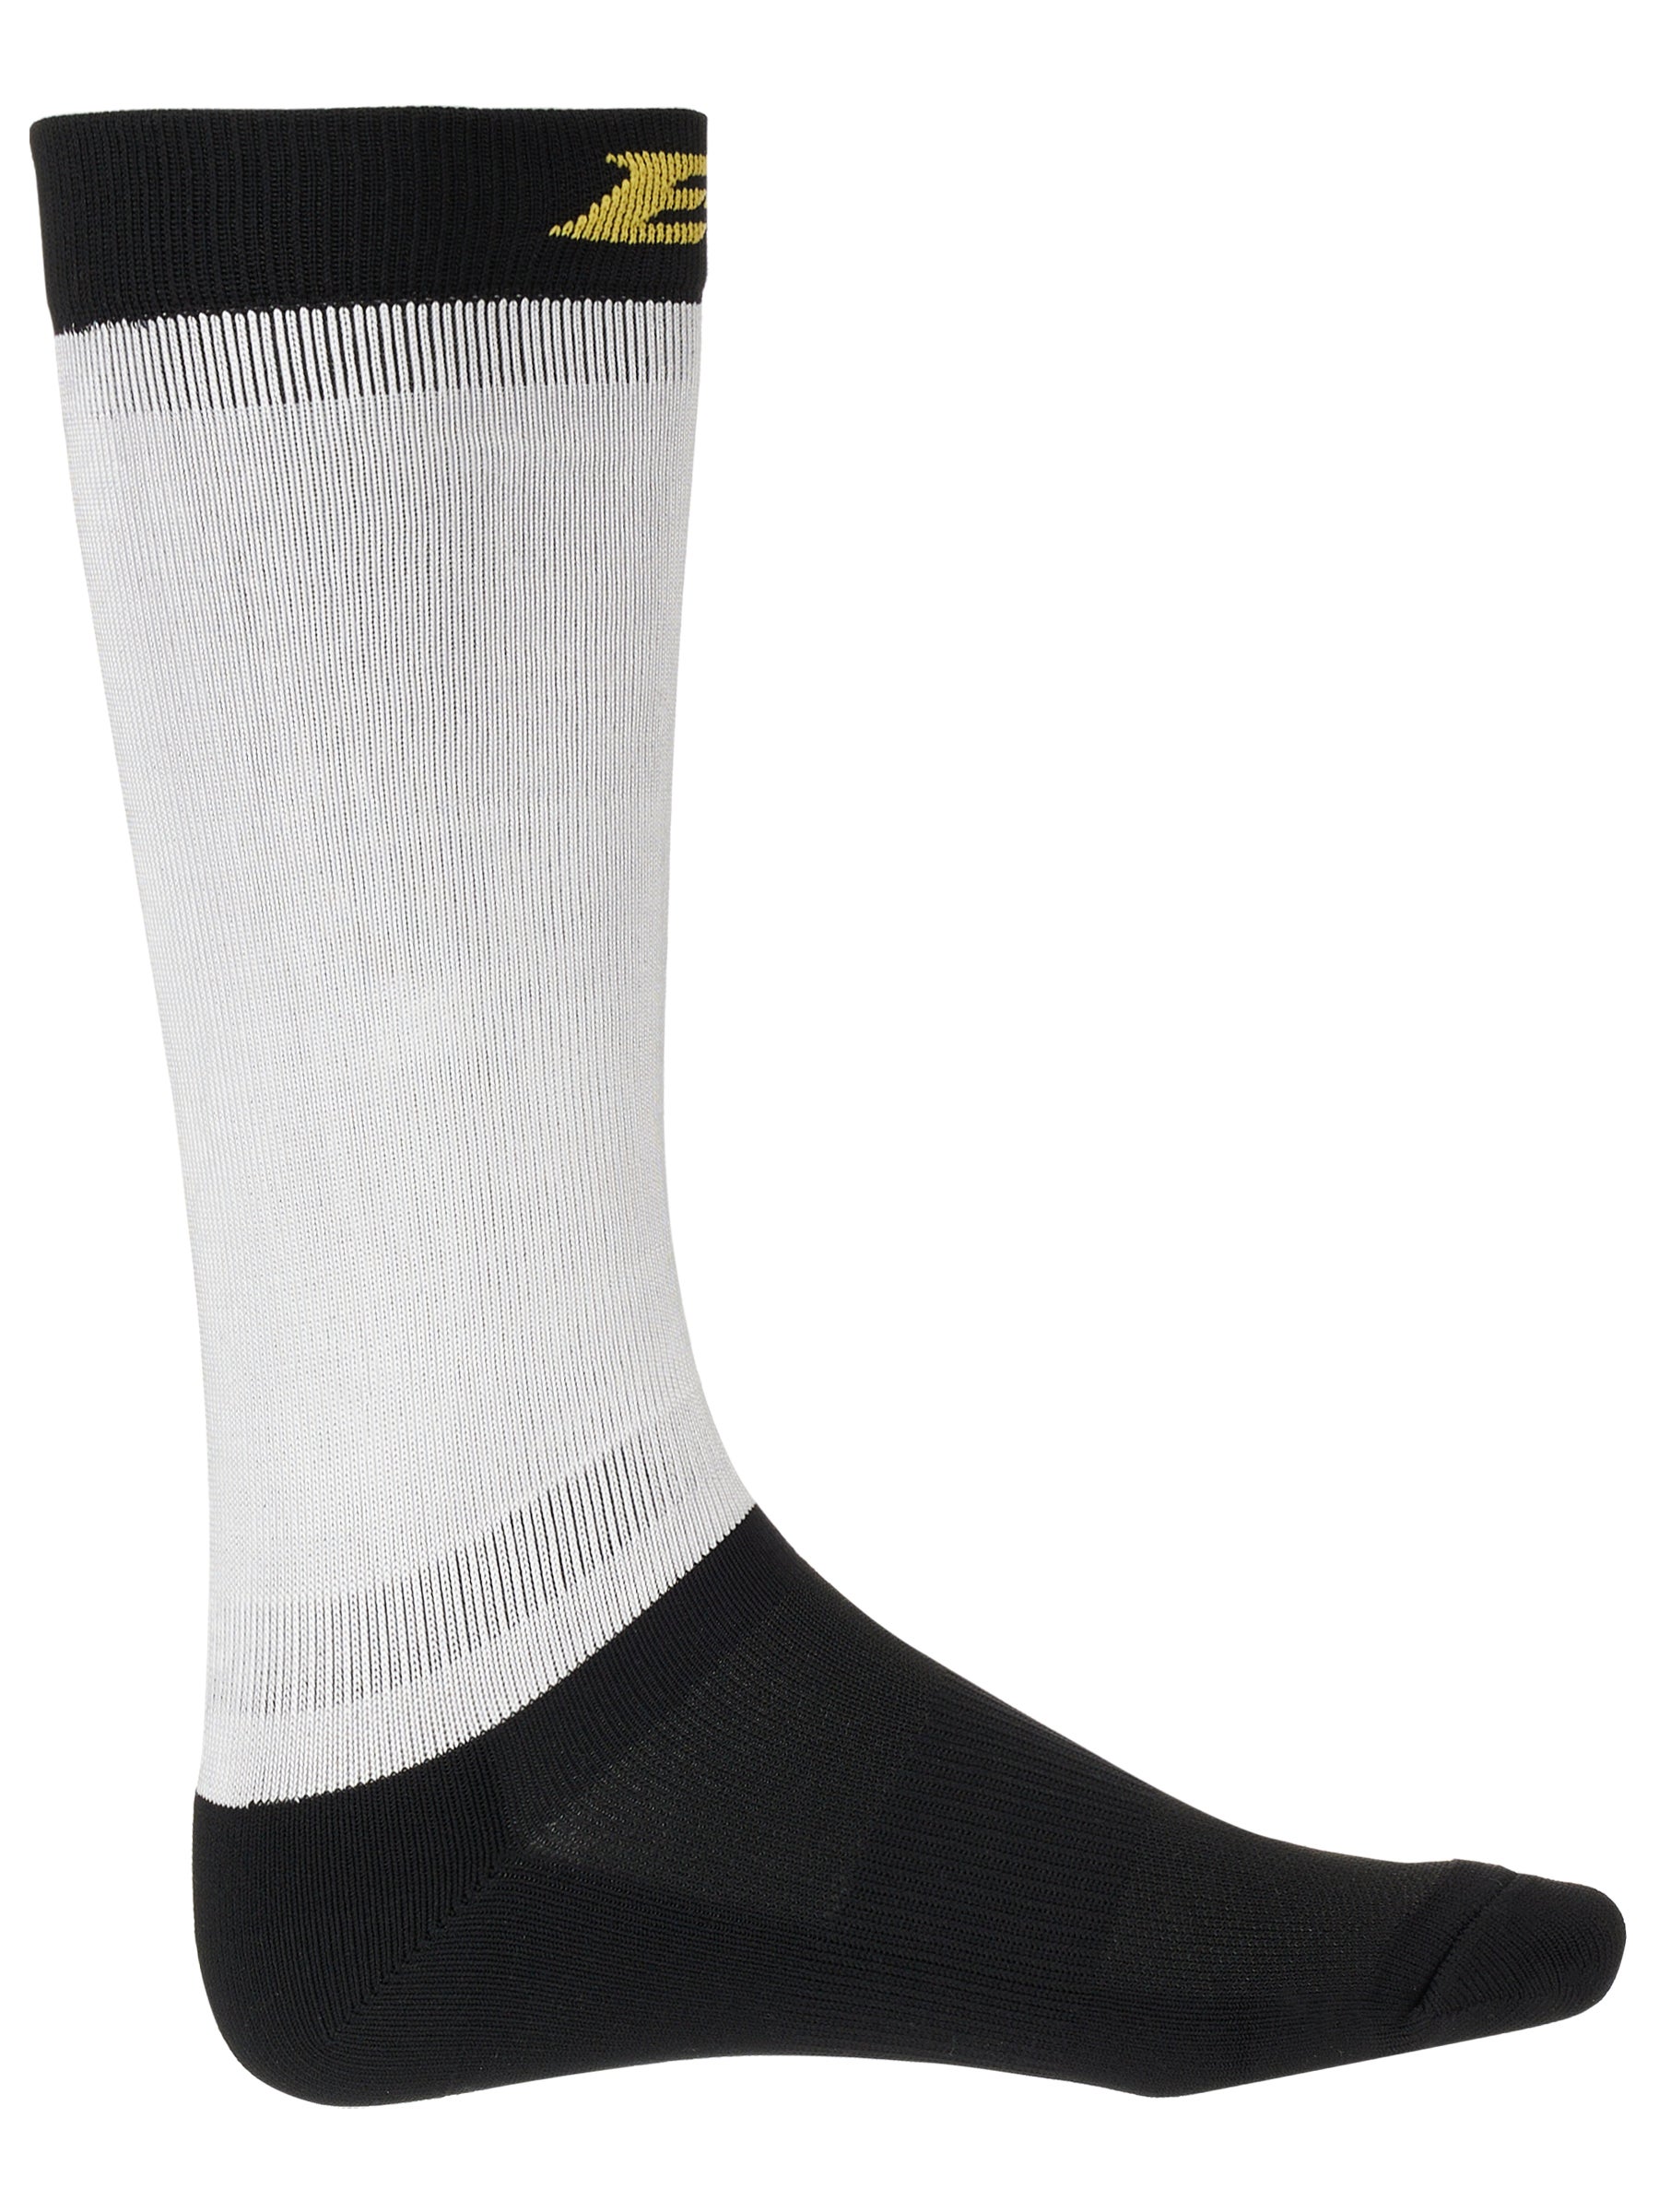 Compression Sock Blue Sports Pro-Shield Cut Resistant Hockey Skate Socks 